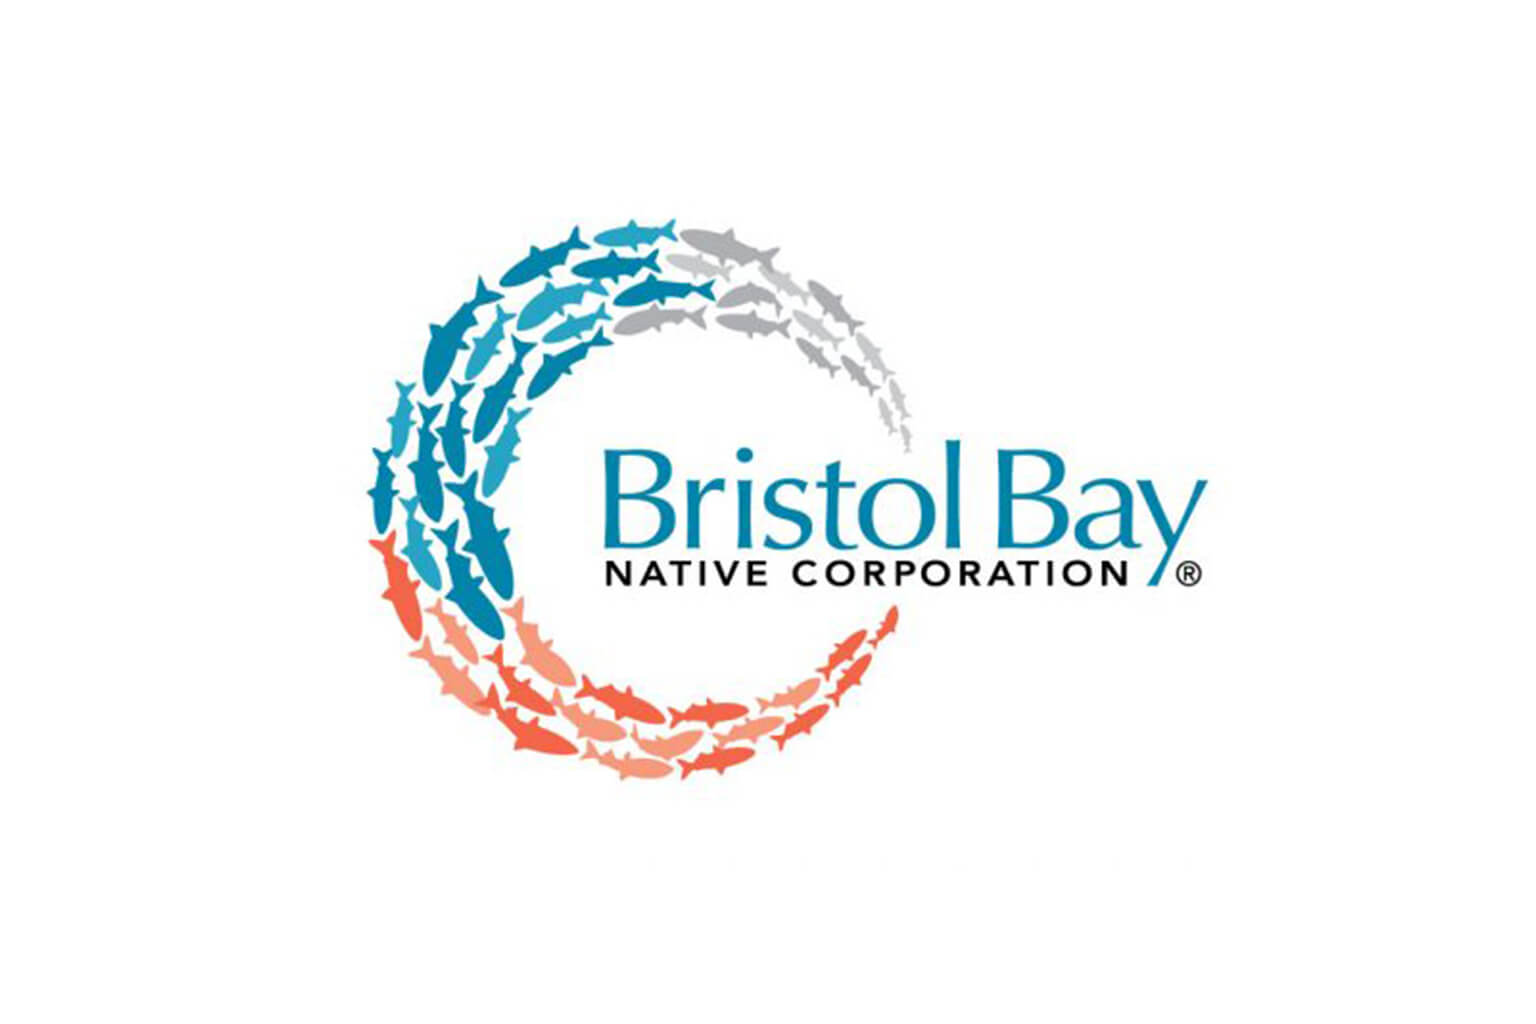 Bristol Bay